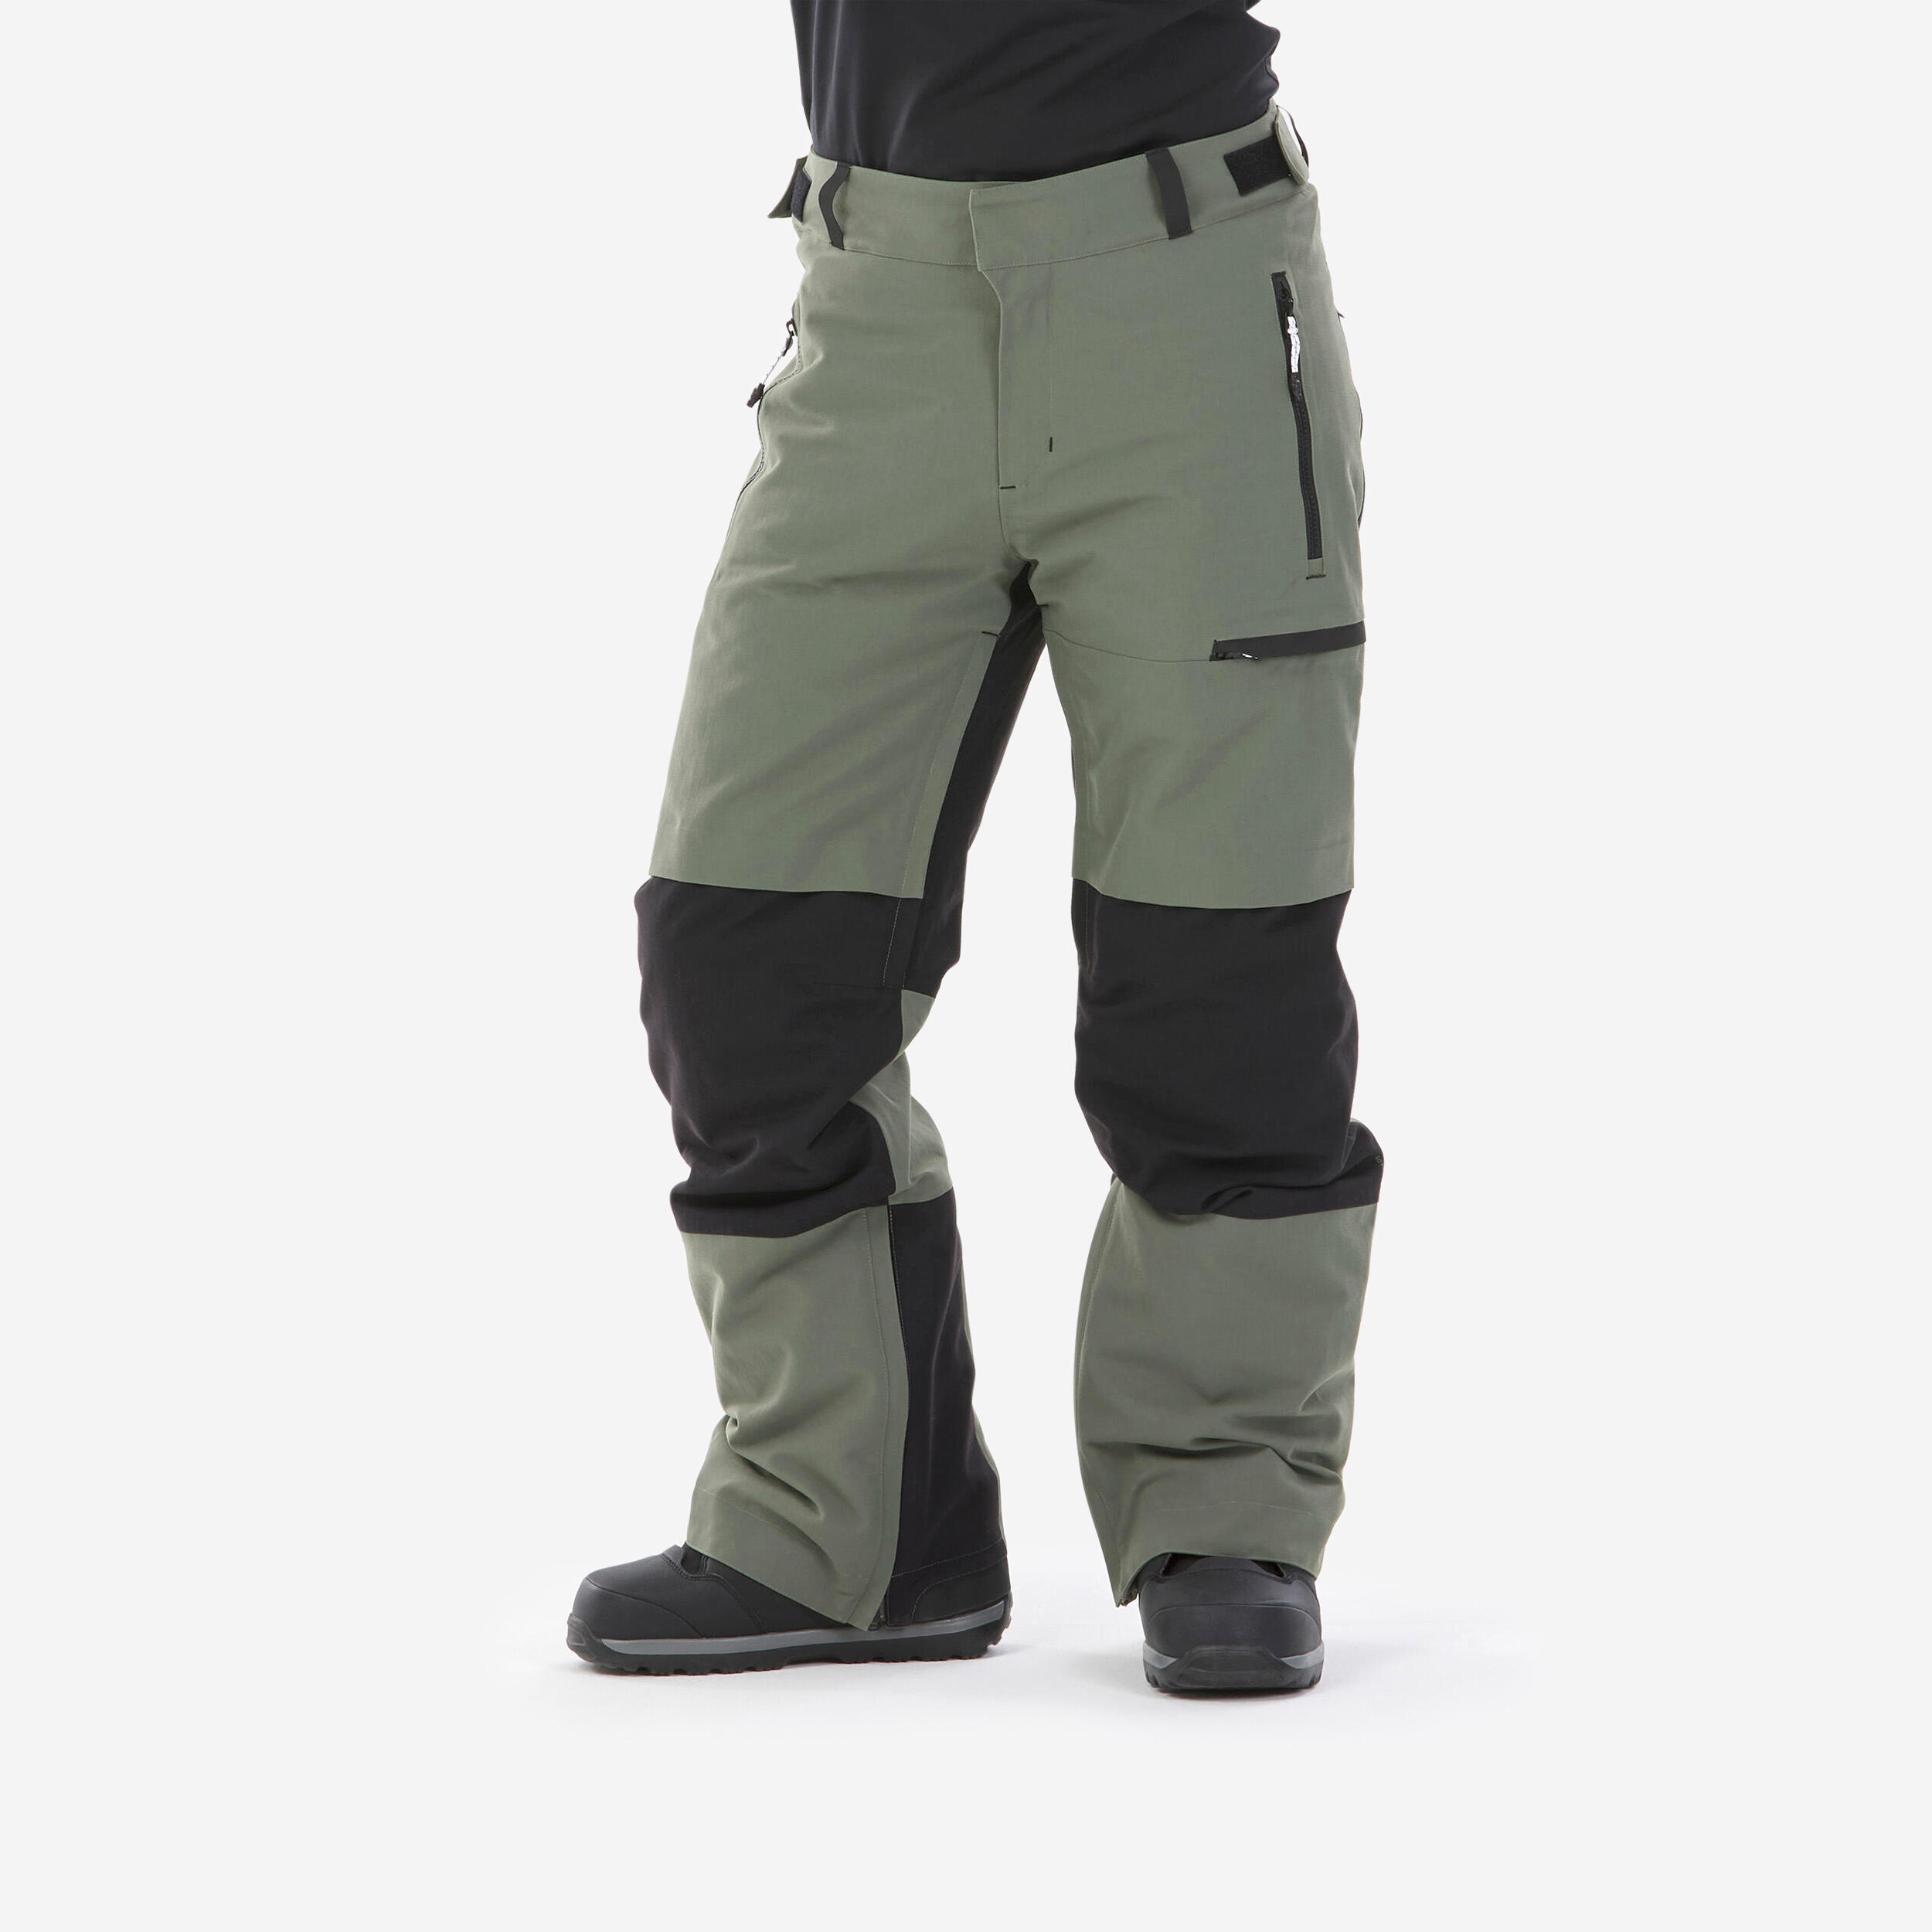 Men’s Snowboard Pants - SNB 500 Green